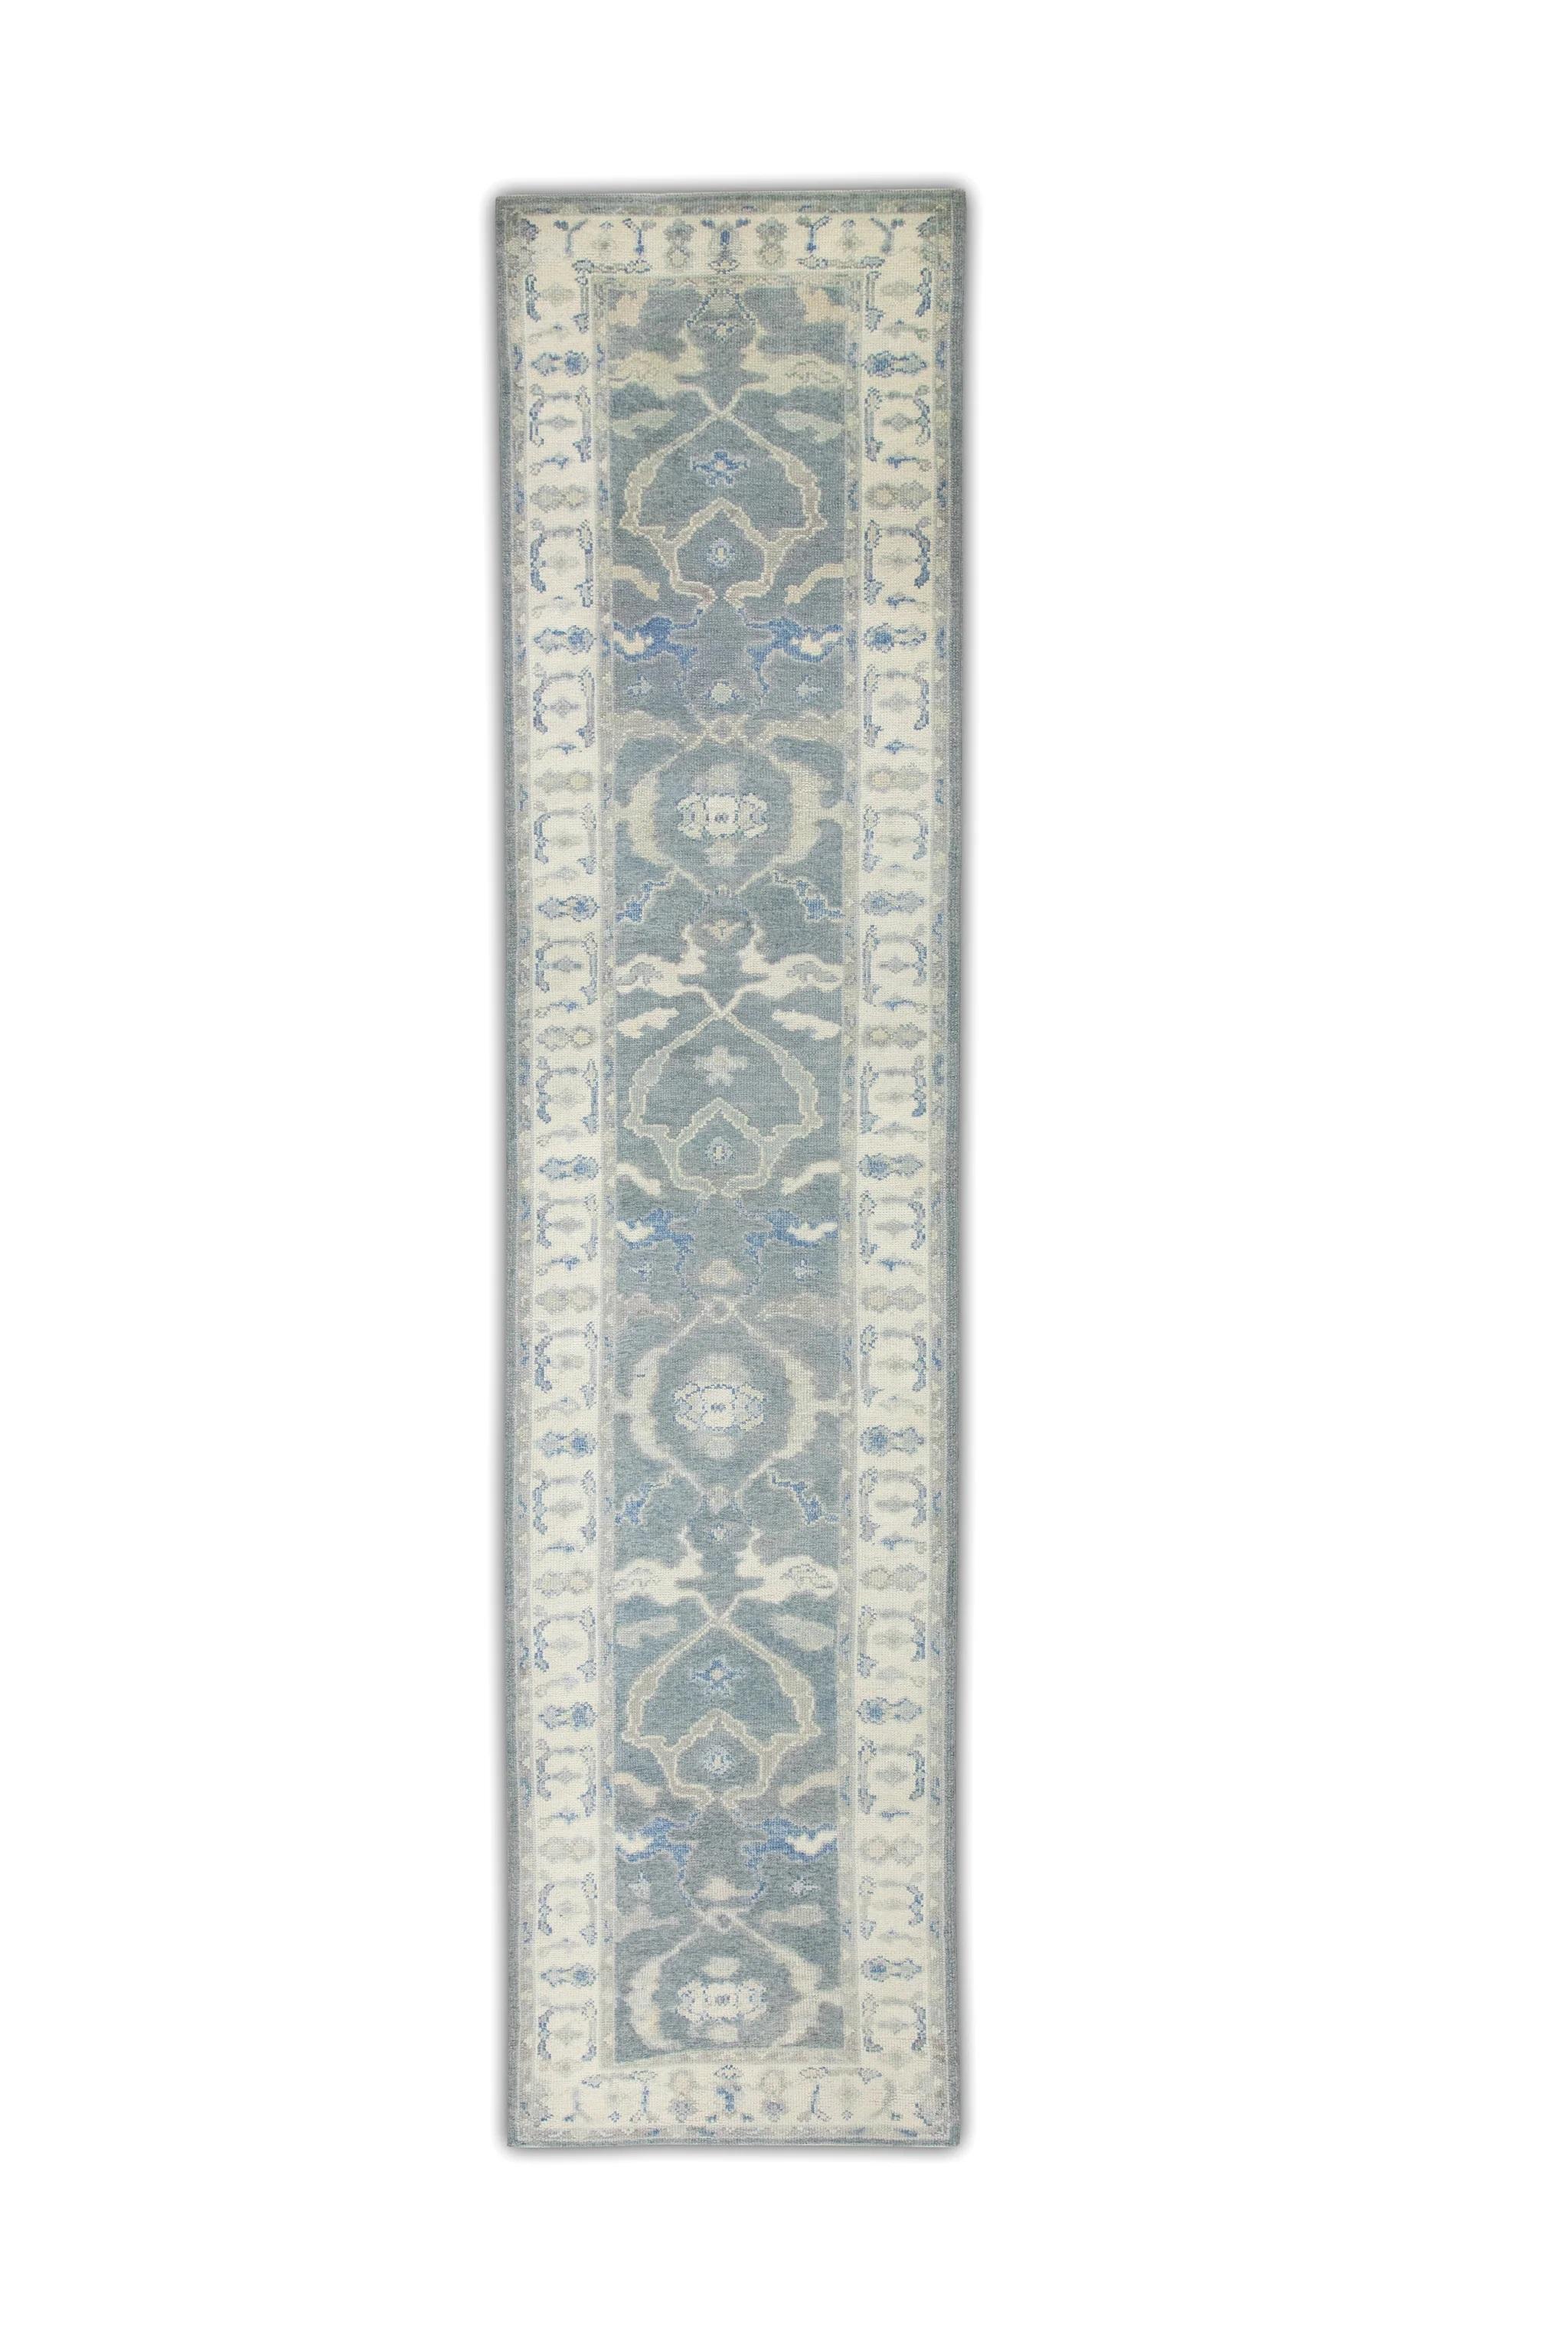 Blue Floral Design Handwoven Wool Turkish Oushak Runner 3' x 12'11